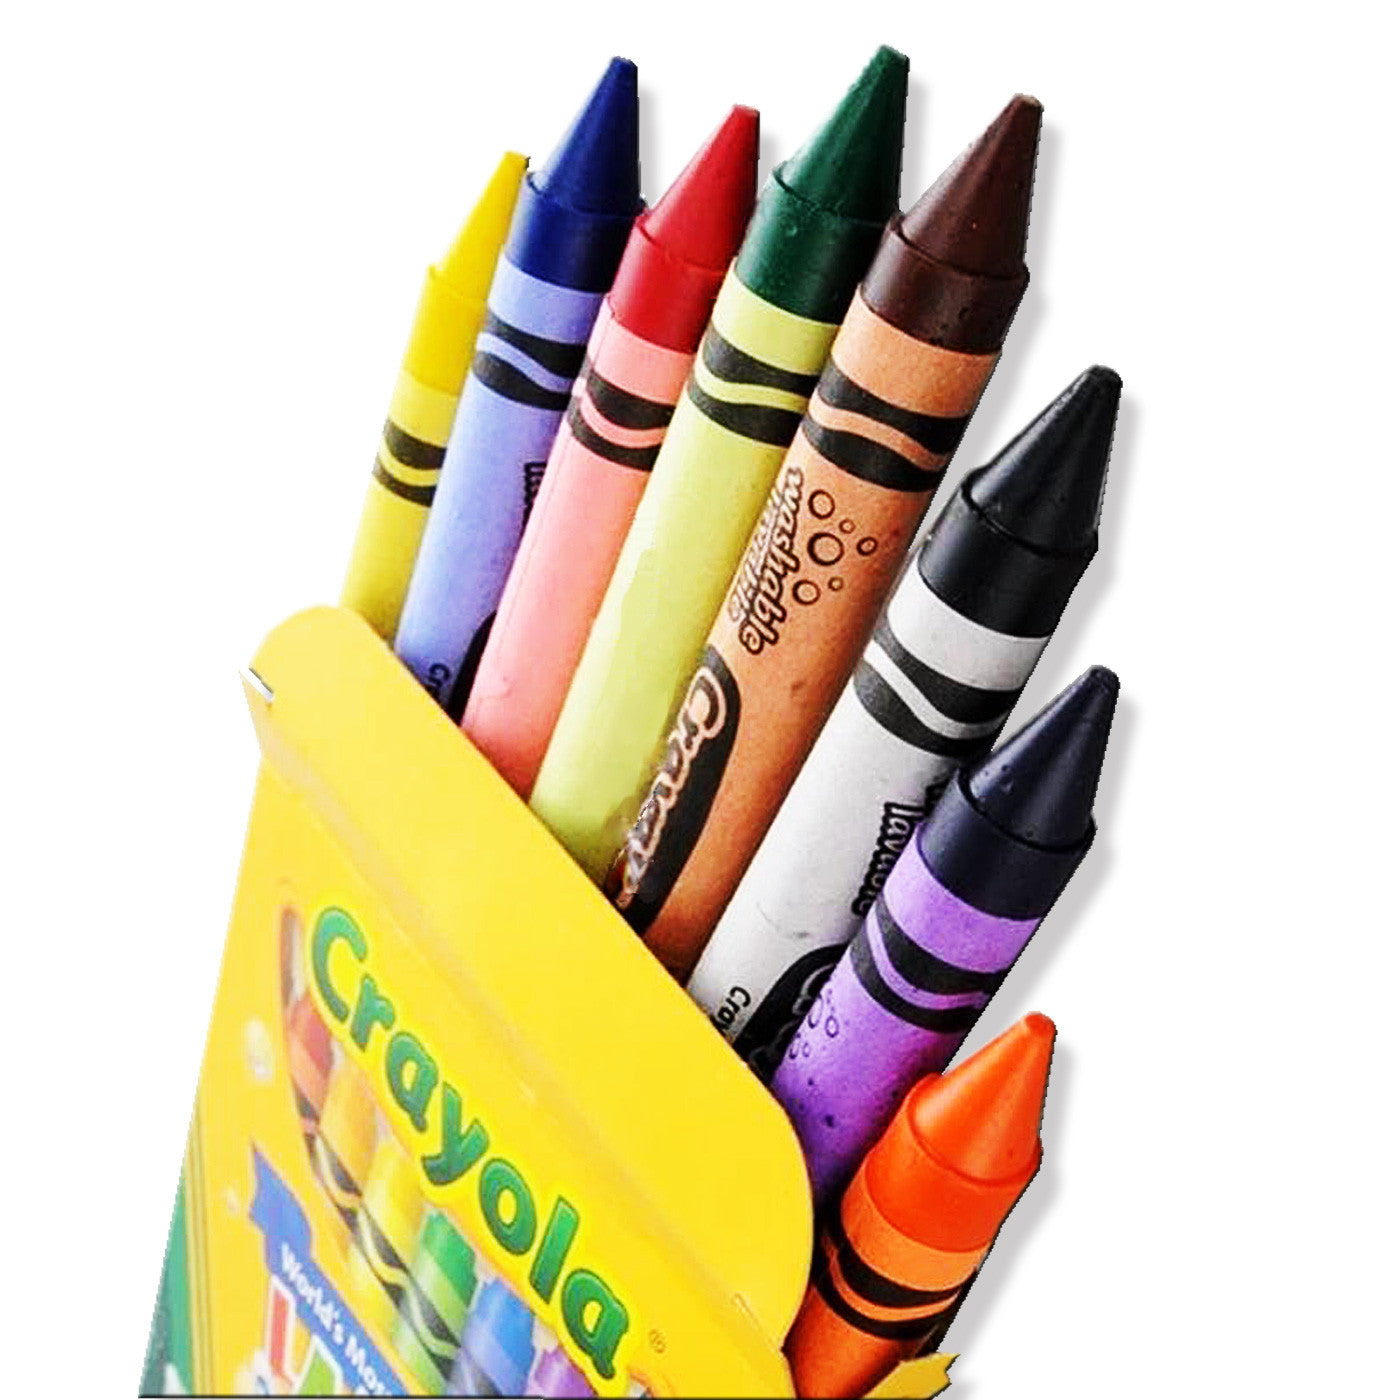 12 Packs: 8 ct. (96 total) Crayola® Jumbo Easy Grasp Crayons